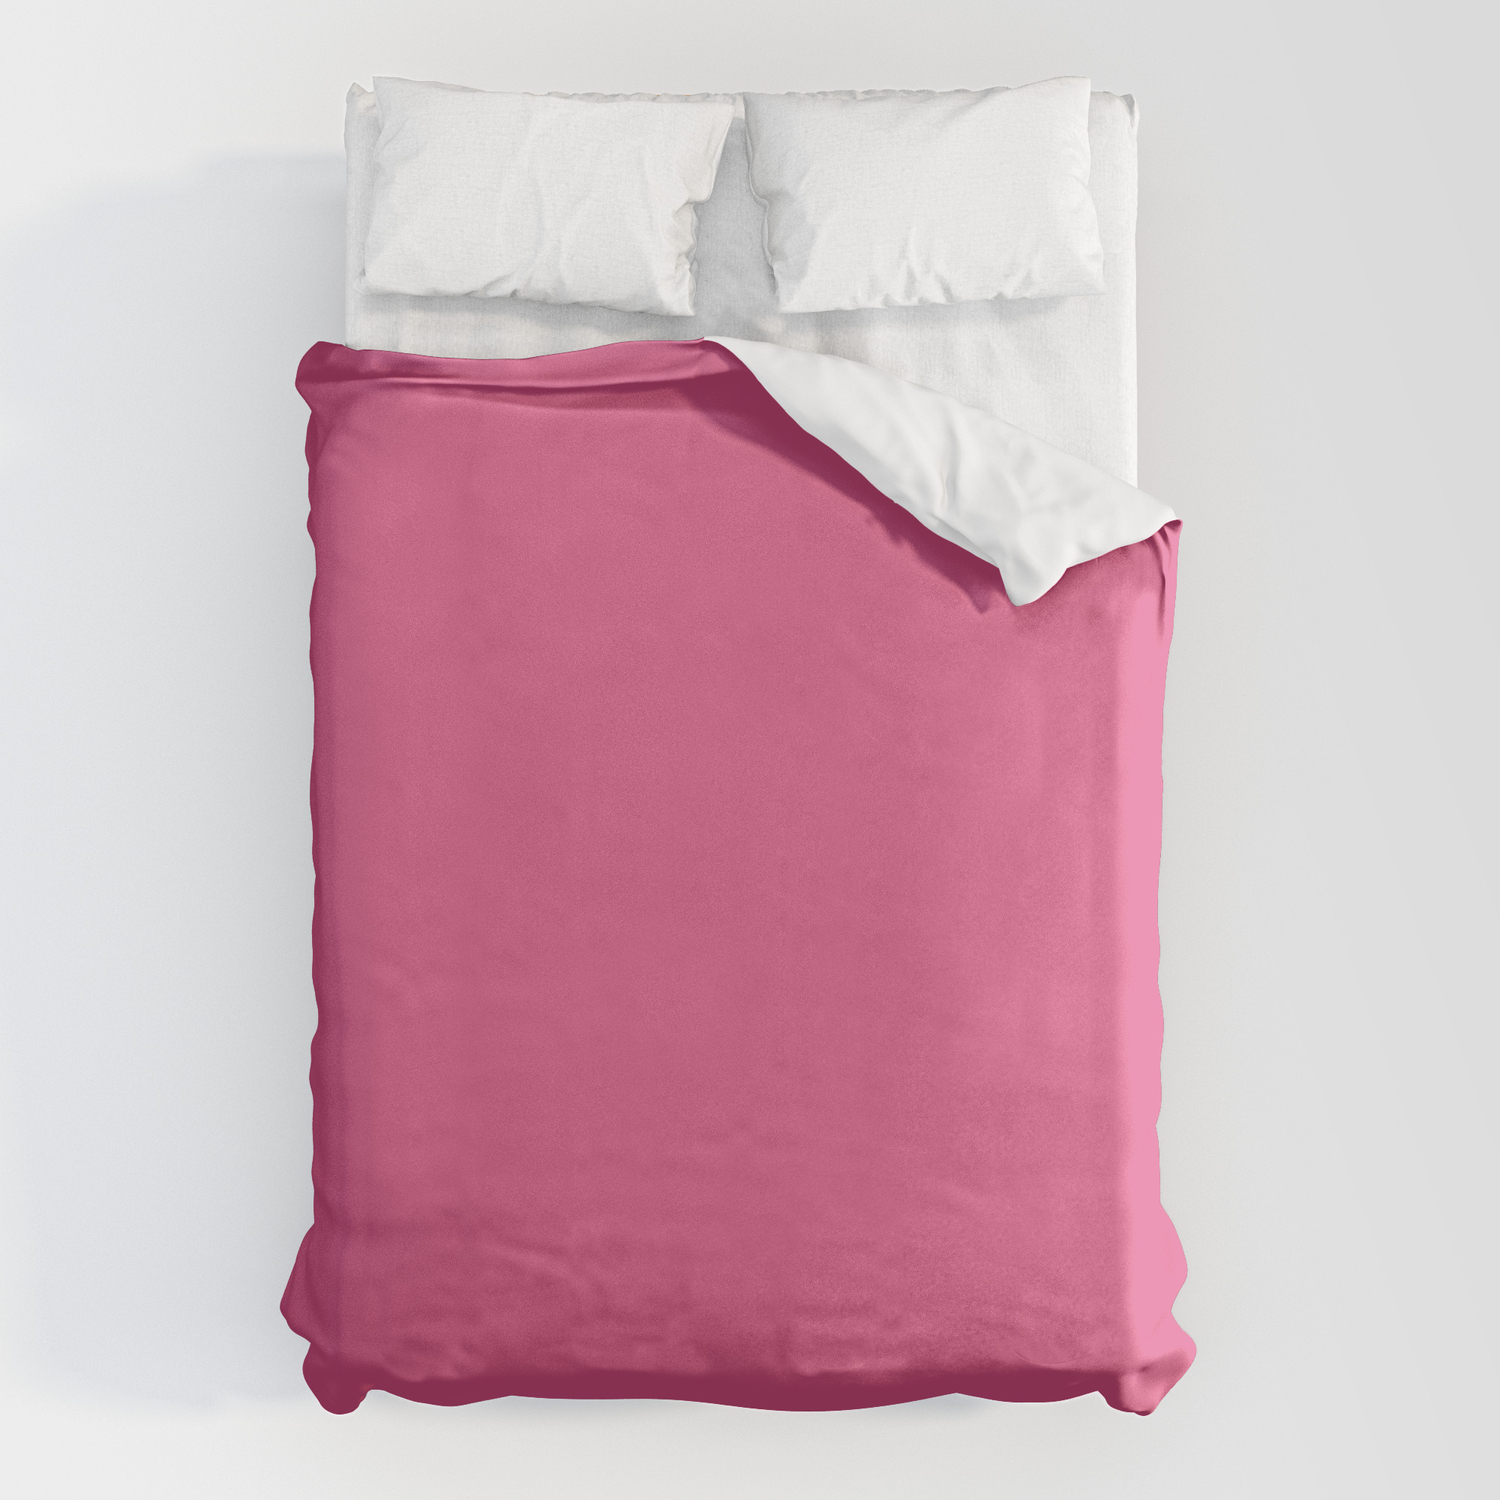 Fandango Pink Solid Color Duvet Cover, Solid Color Duvet Covers